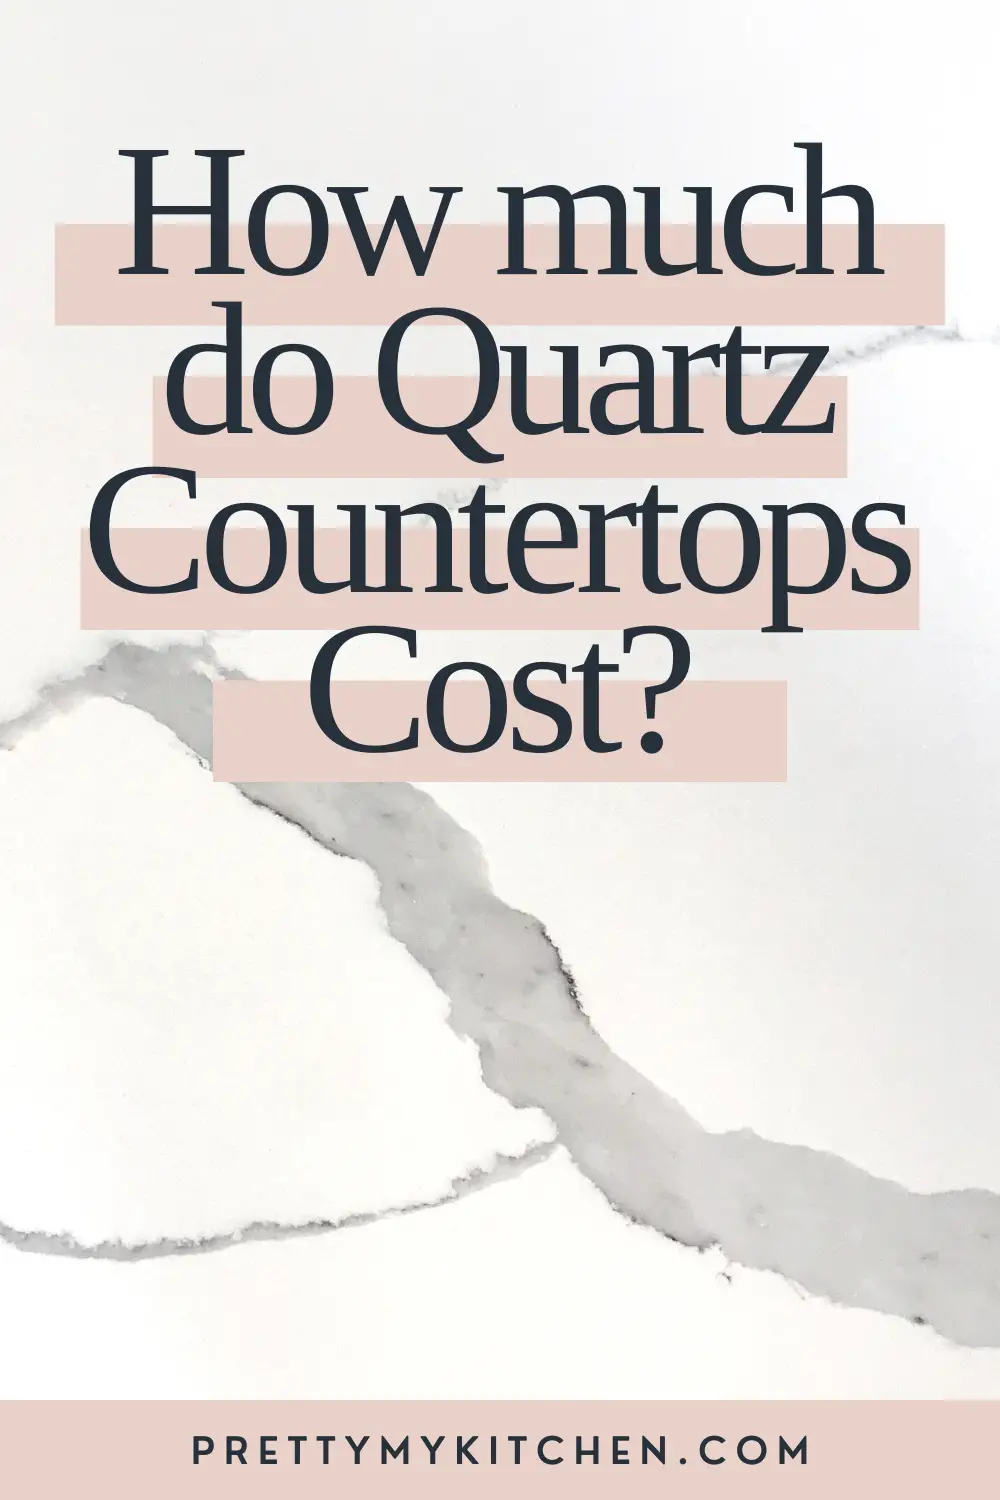 how much do quartz countertops cost?